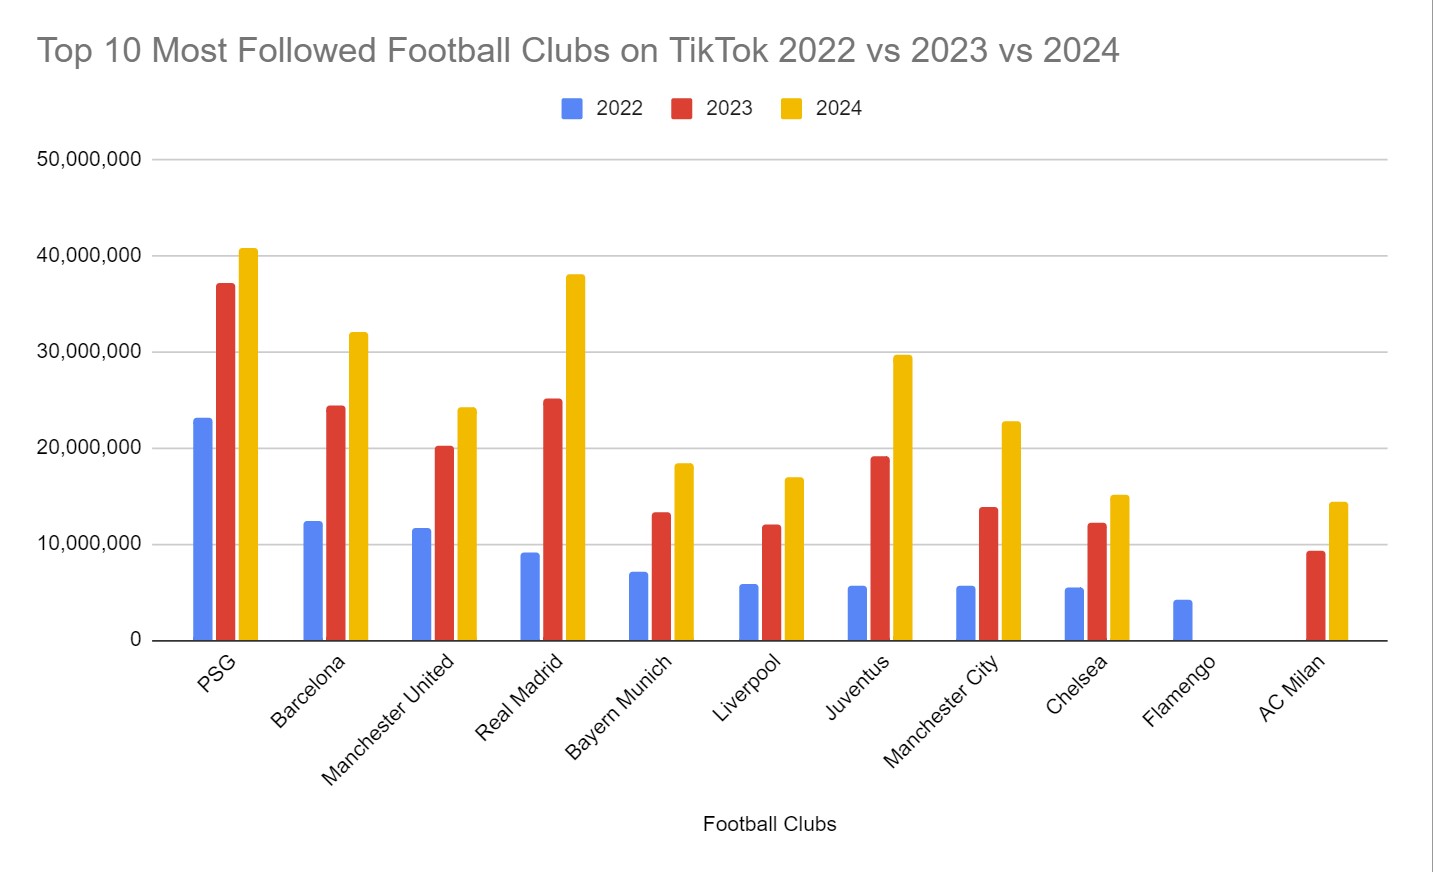 Top 10 Most Followed Football Clubs on TikTok 2022 vs 2023 vs 2024